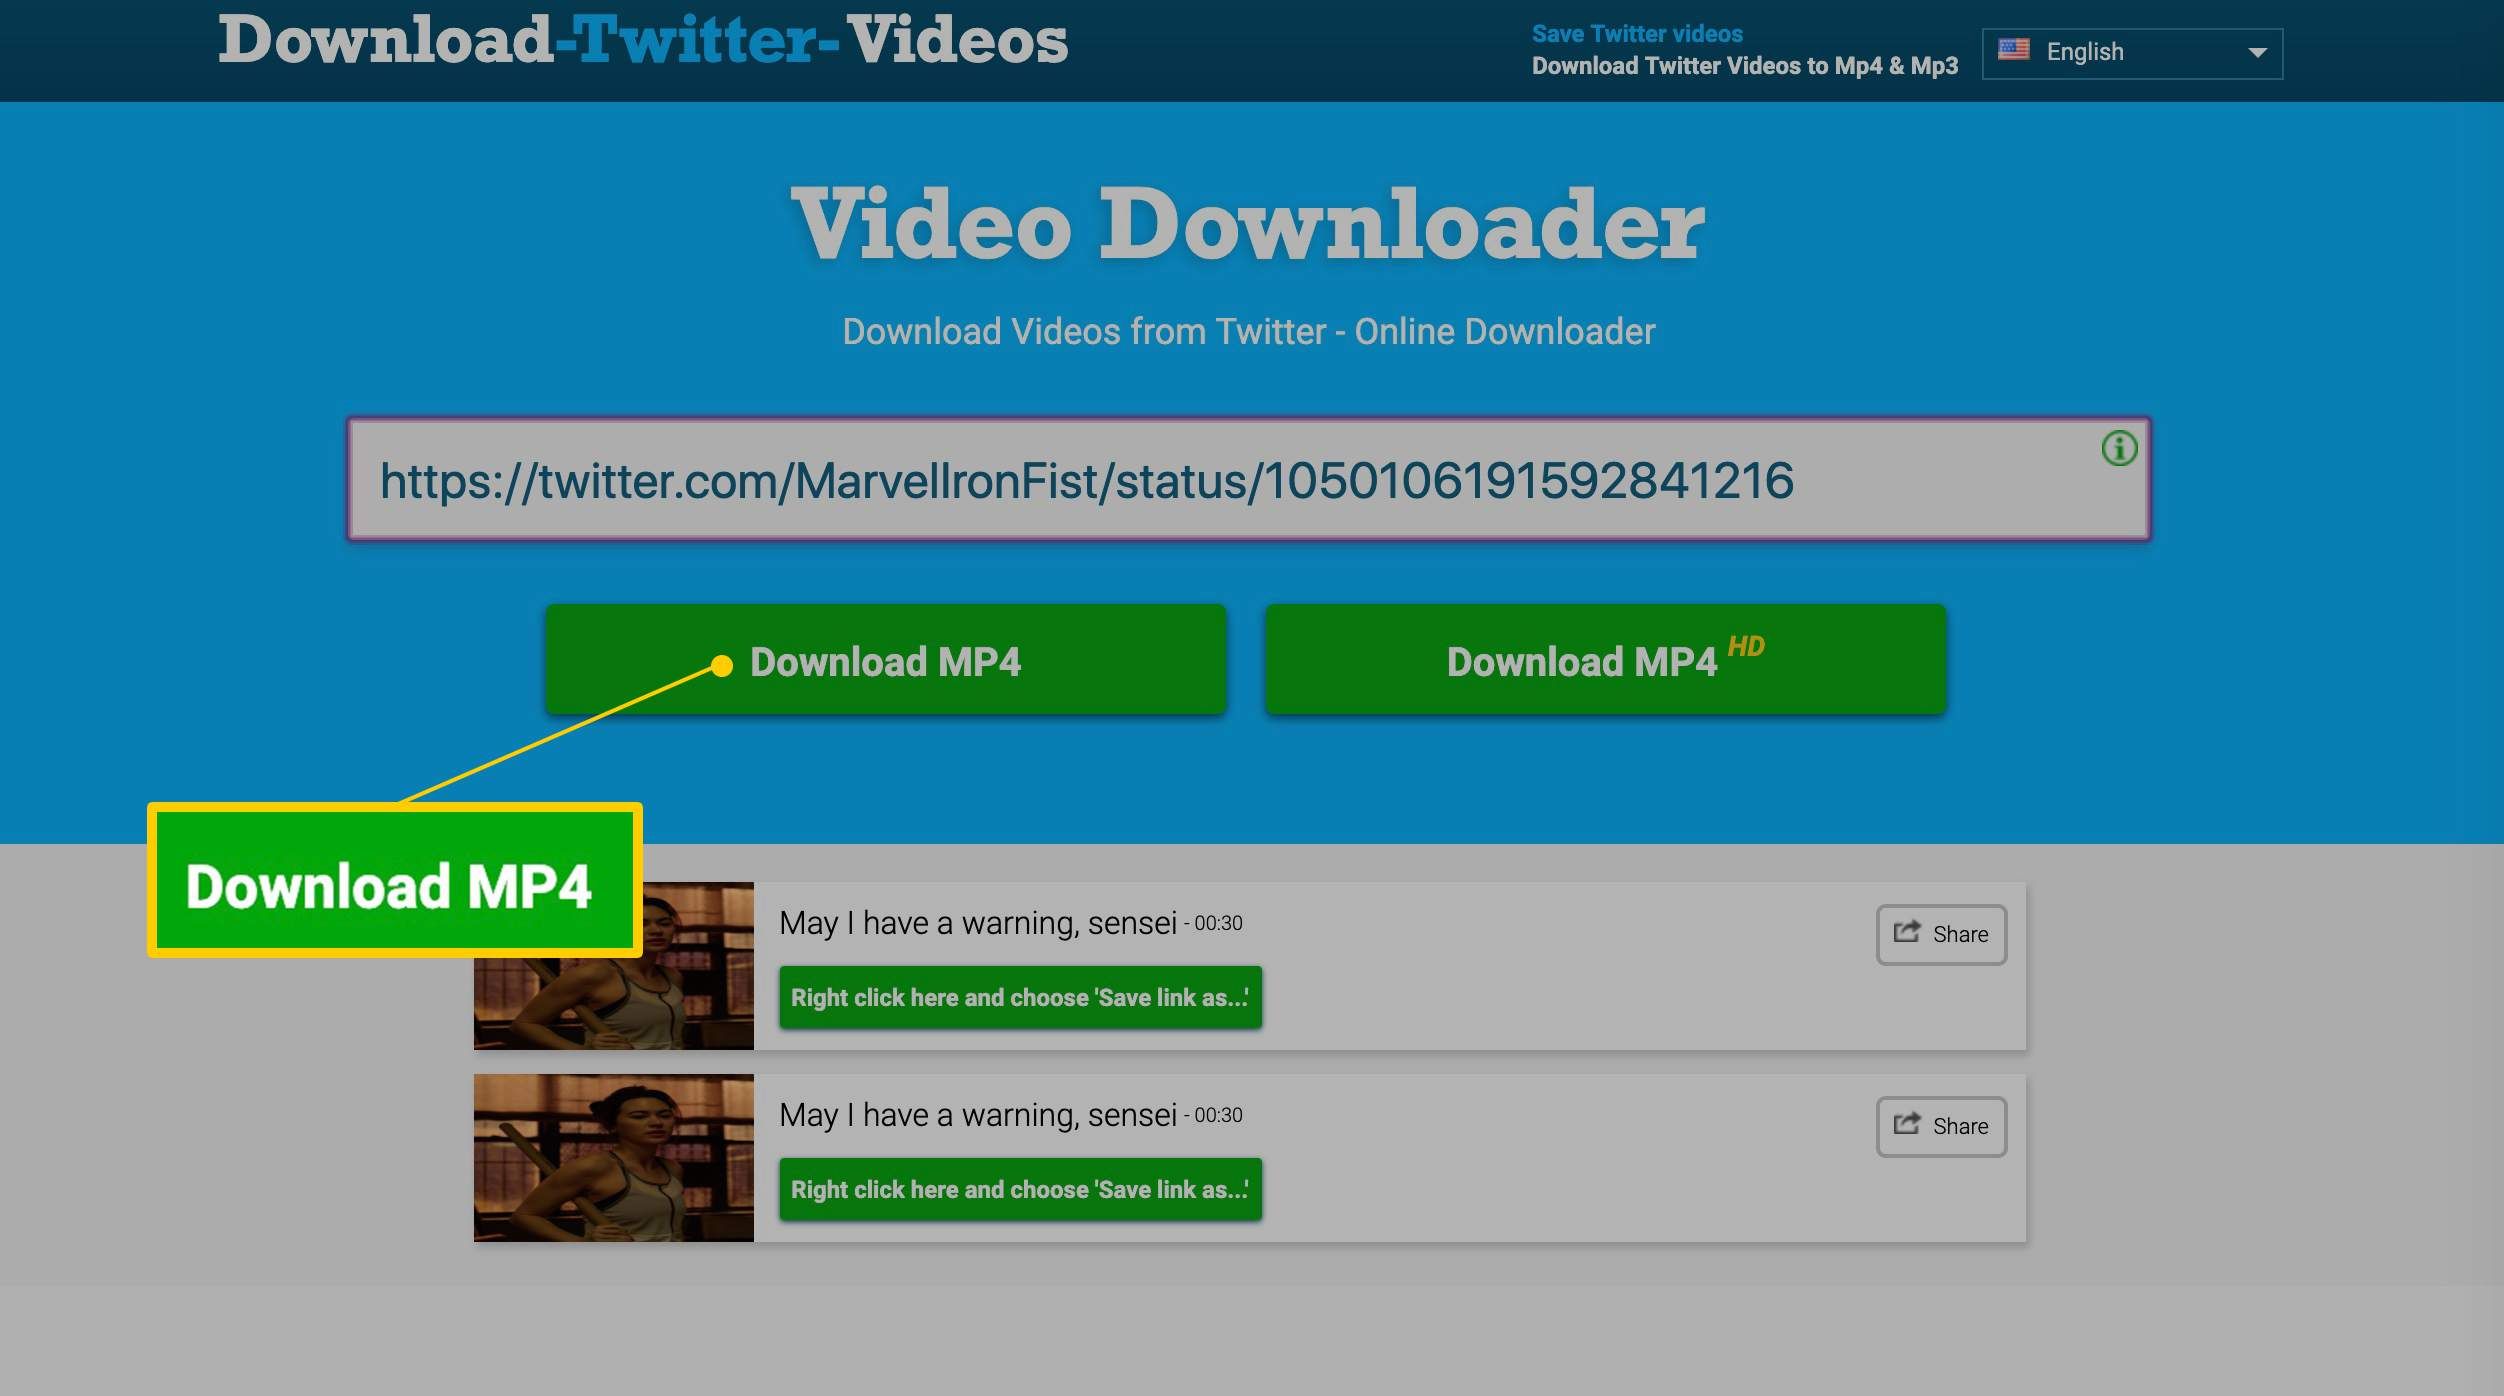 Camwhores video downloader